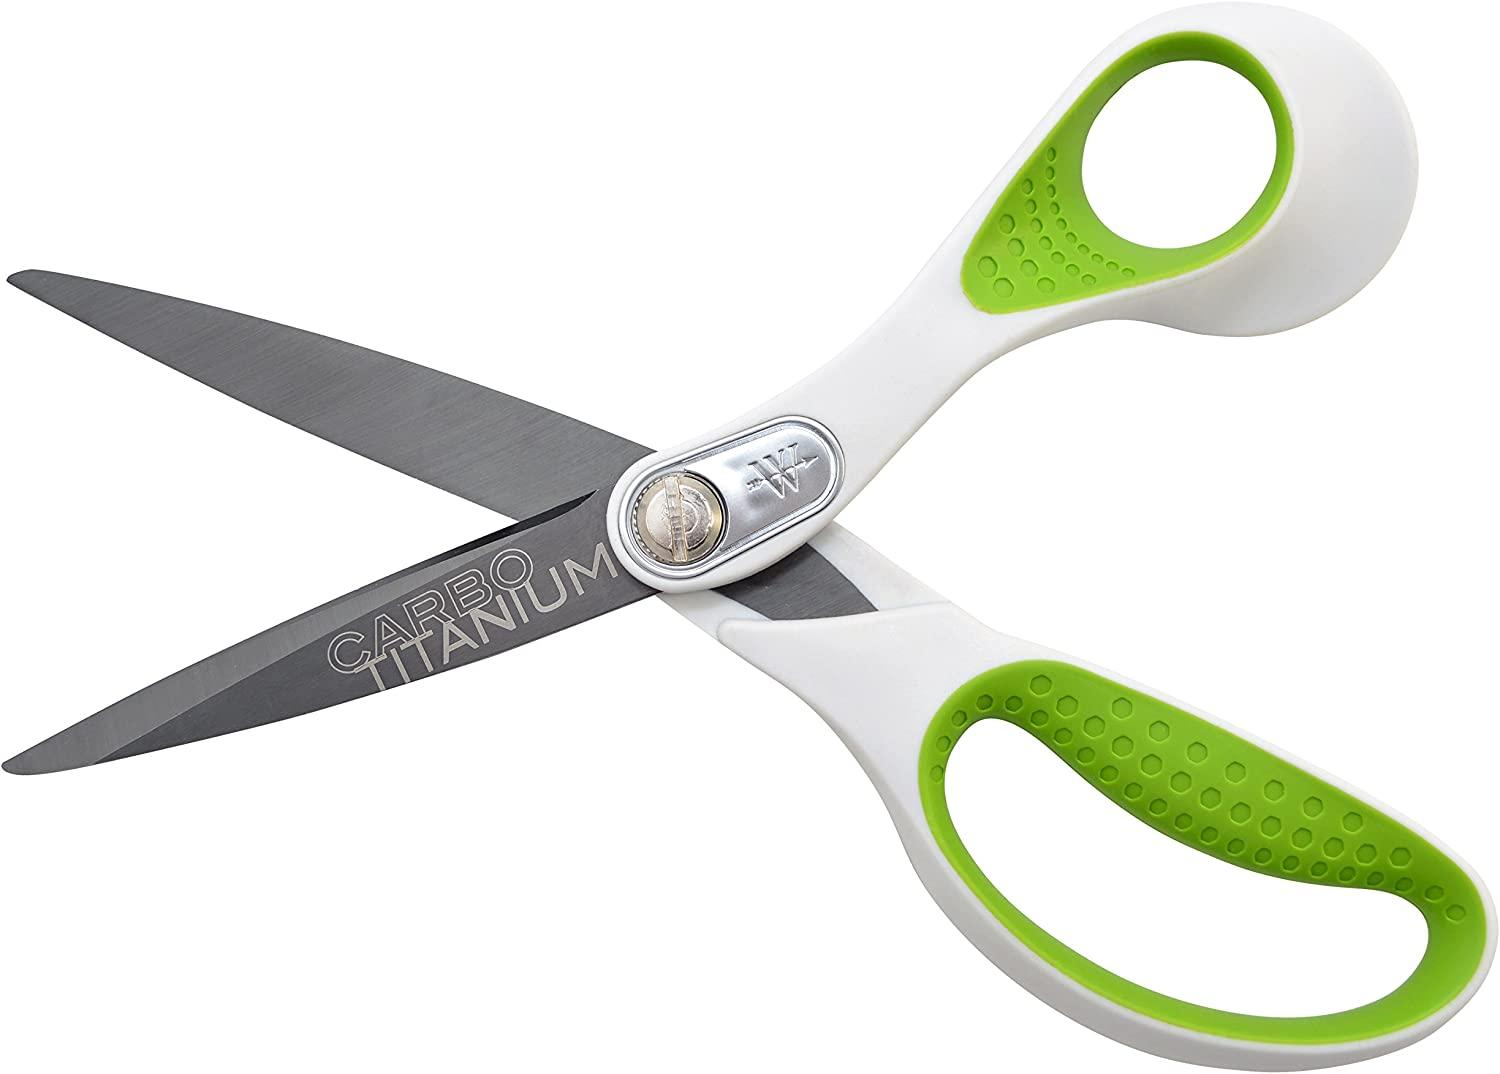 Westcott® Heavy-Duty Crafting & Quilting Scissors